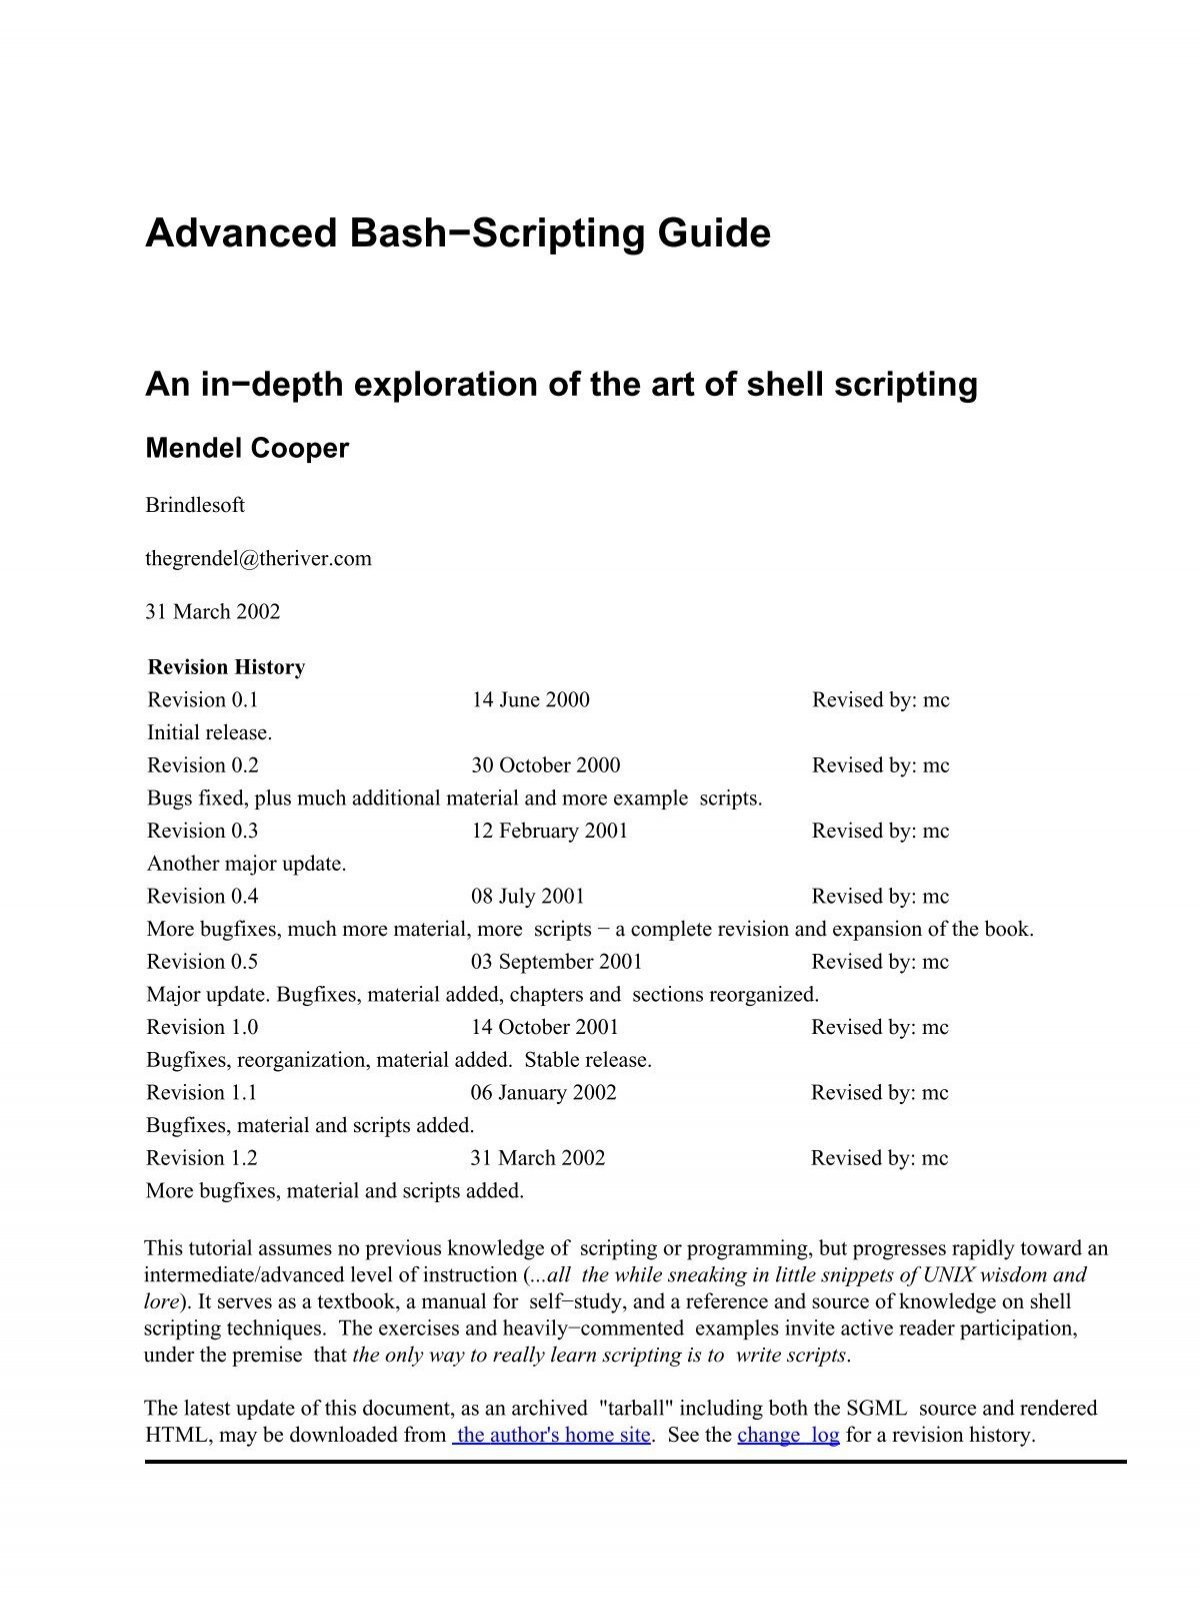 Advanced Bash Scripting Guide - advanced shutdown script community tutorials roblox